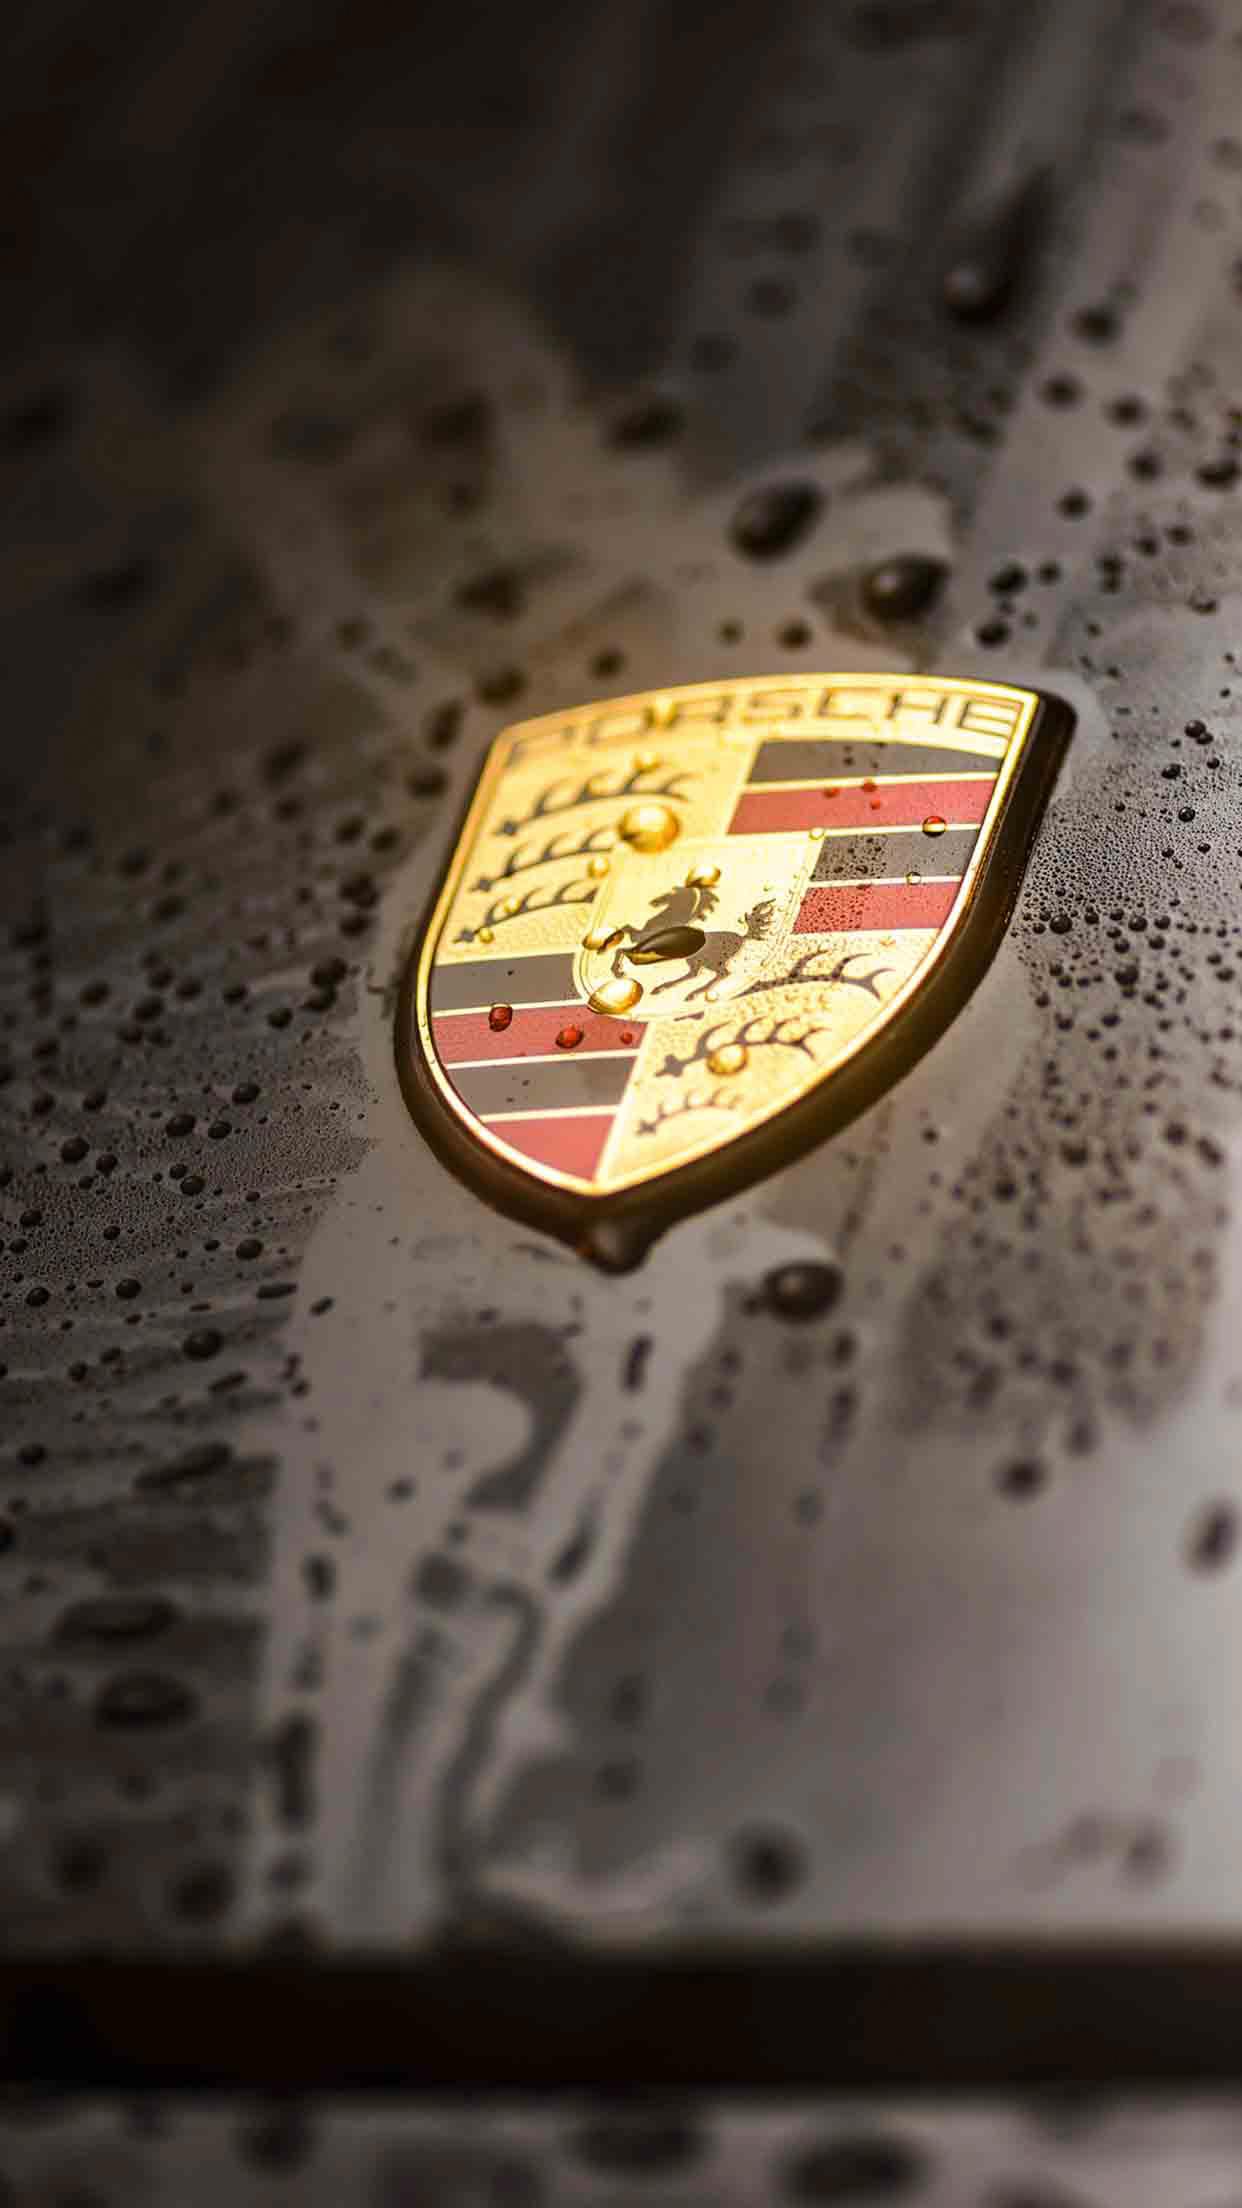 Porsche Wallpaper (Including iPhone Resolution)